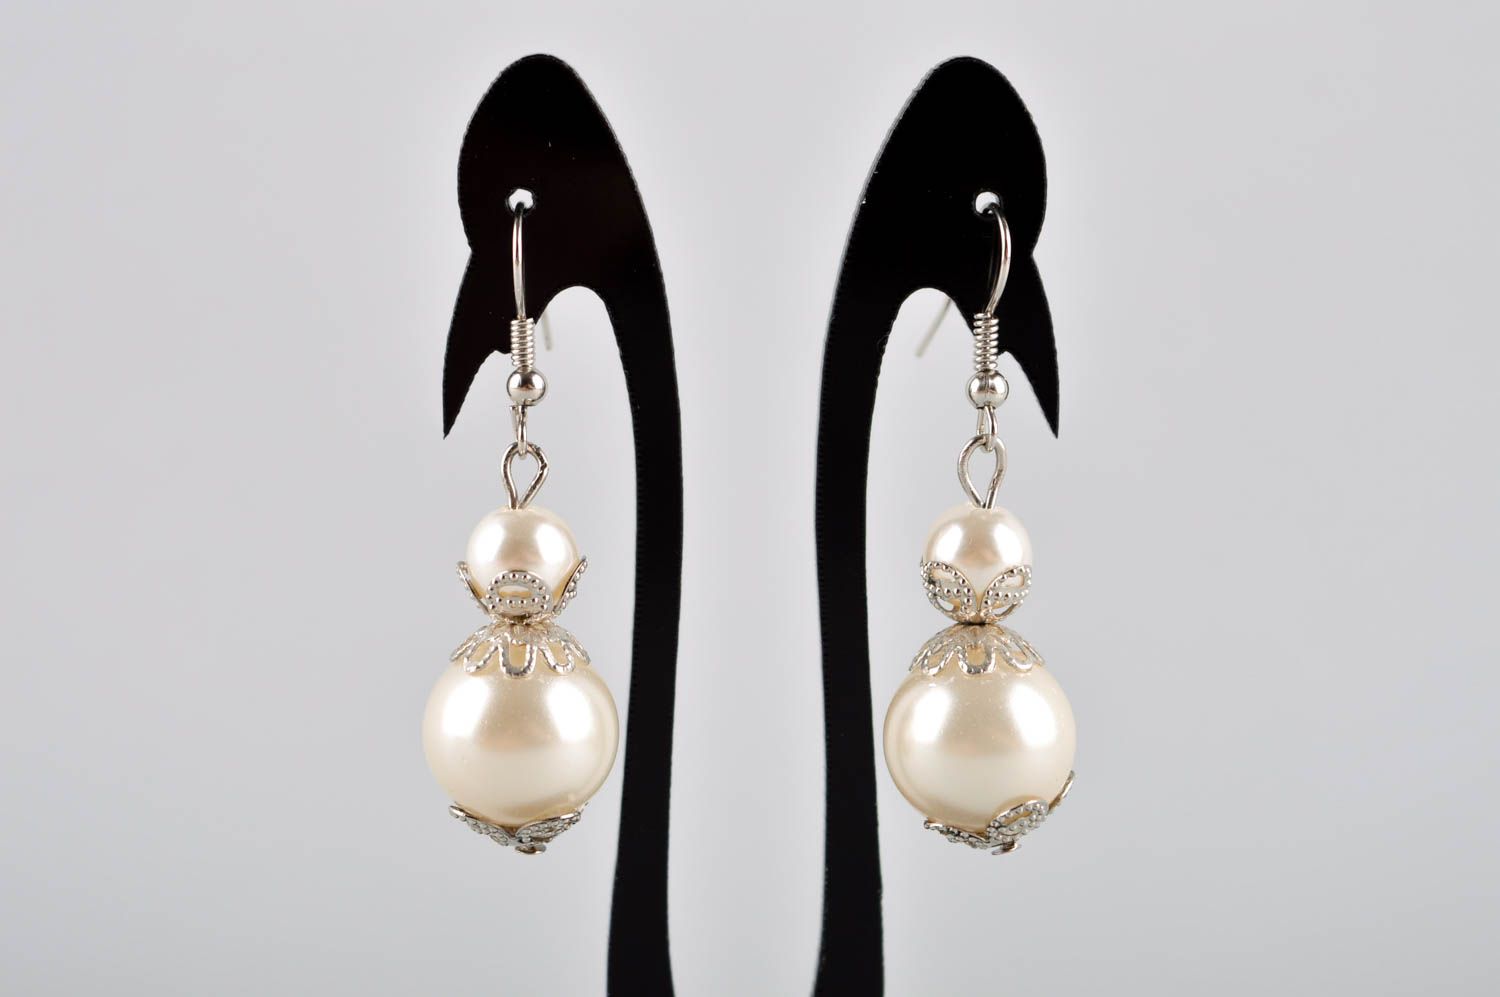 Homemade jewelry designer earrings cute earrings fashion accessories gift ideas photo 2